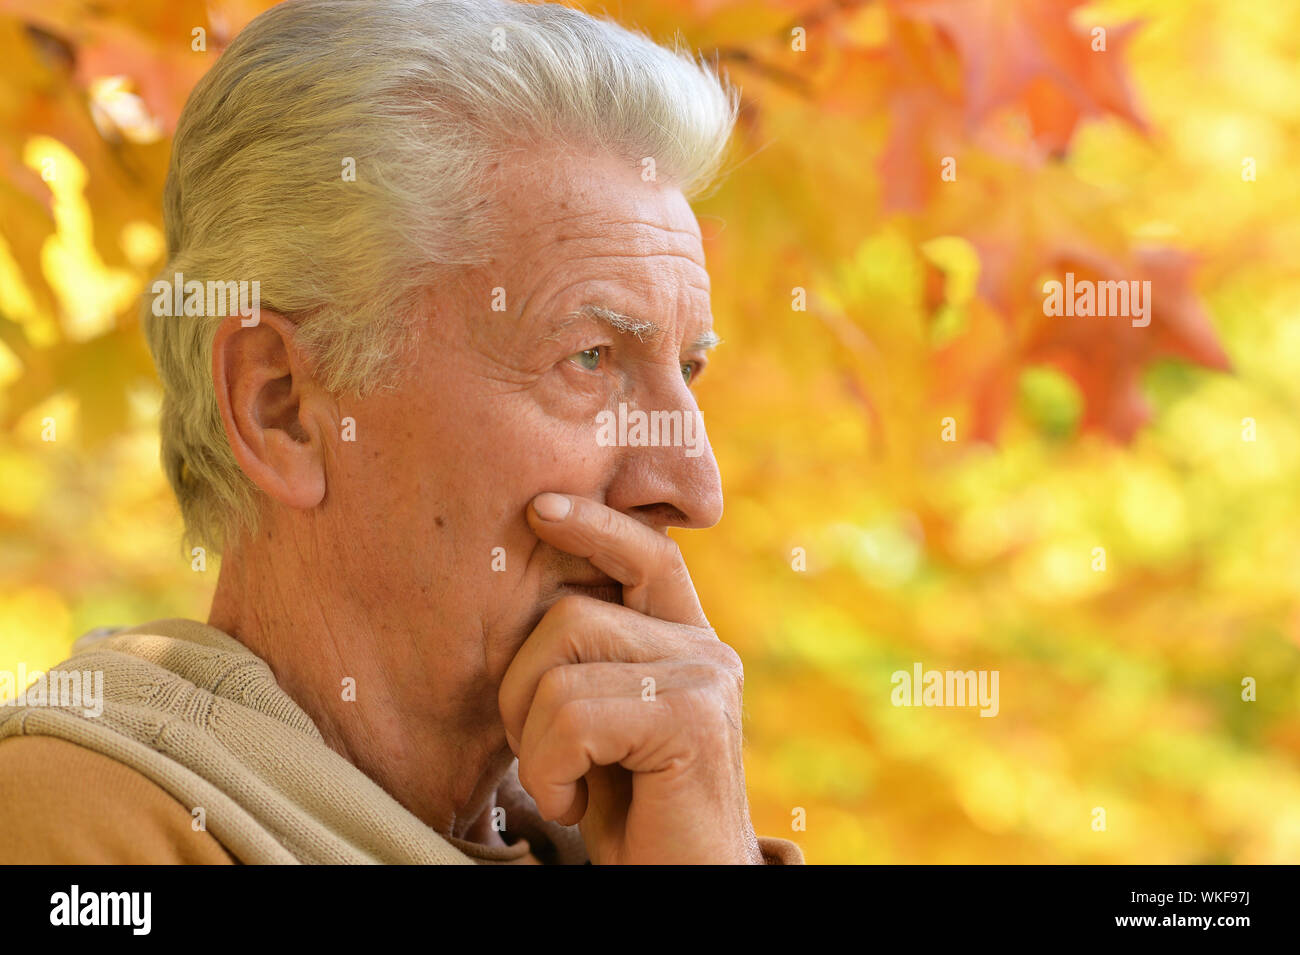 Portrait of sad senior man posing outdoors Stock Photo